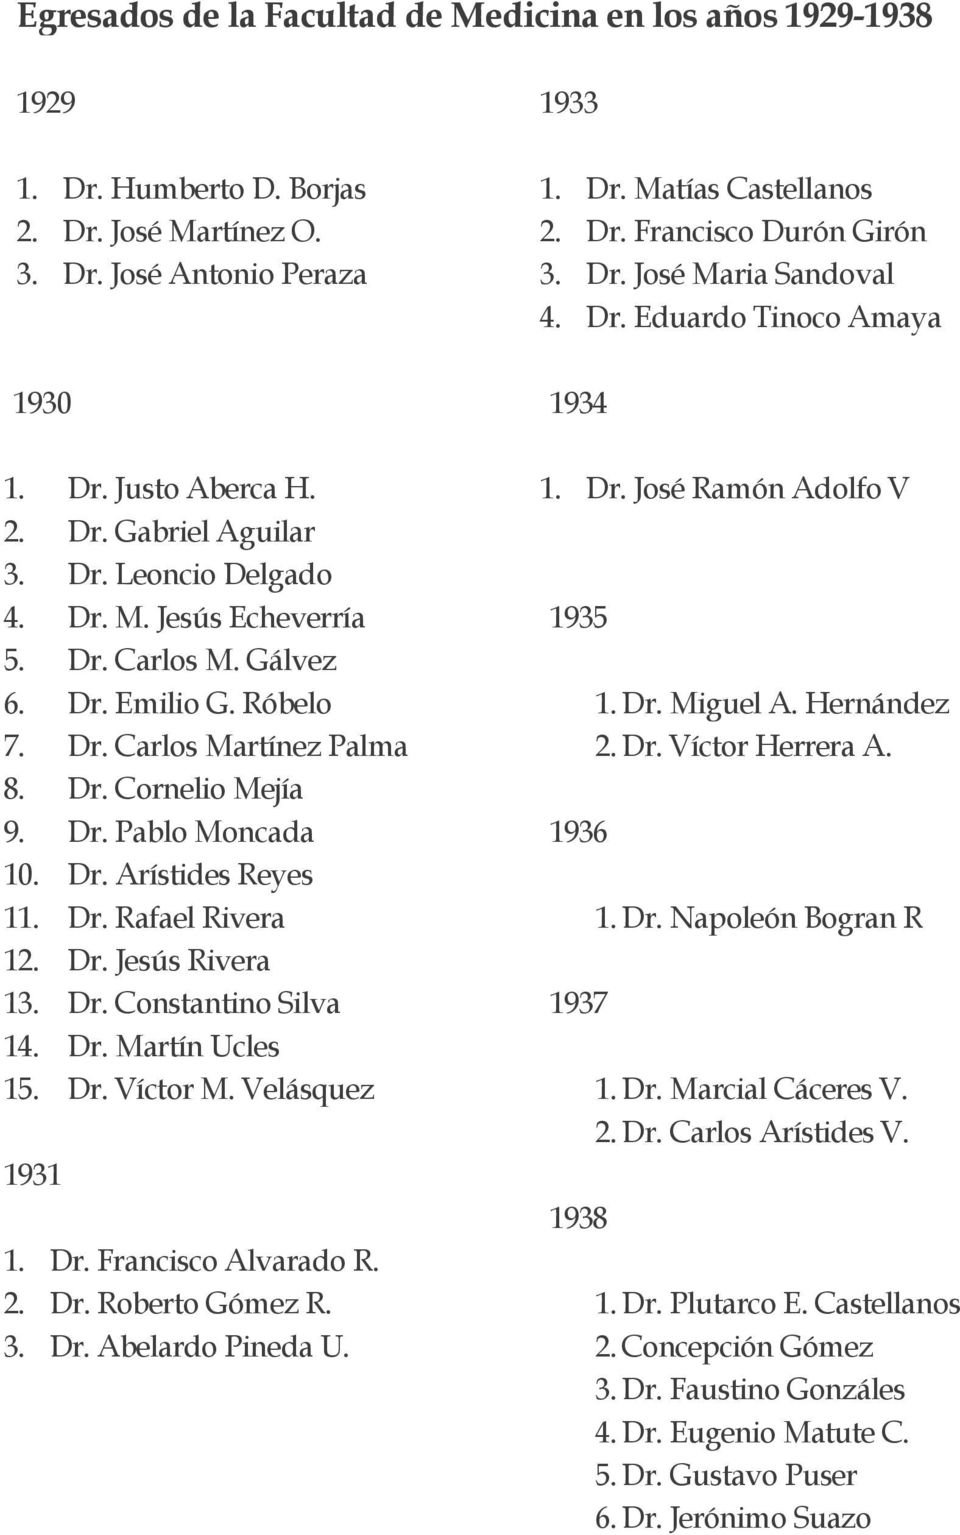 Dr. Constantino Silva 14. Dr. Martín Ucles 15. Dr. Víctor M. Velásquez 1931 1. Dr. Francisco Alvarado R. 2. Dr. Roberto Gómez R. 3. Dr. Abelardo Pineda U. 1933 1. Dr. Matías Castellanos 2. Dr. Francisco Durón Girón 3.